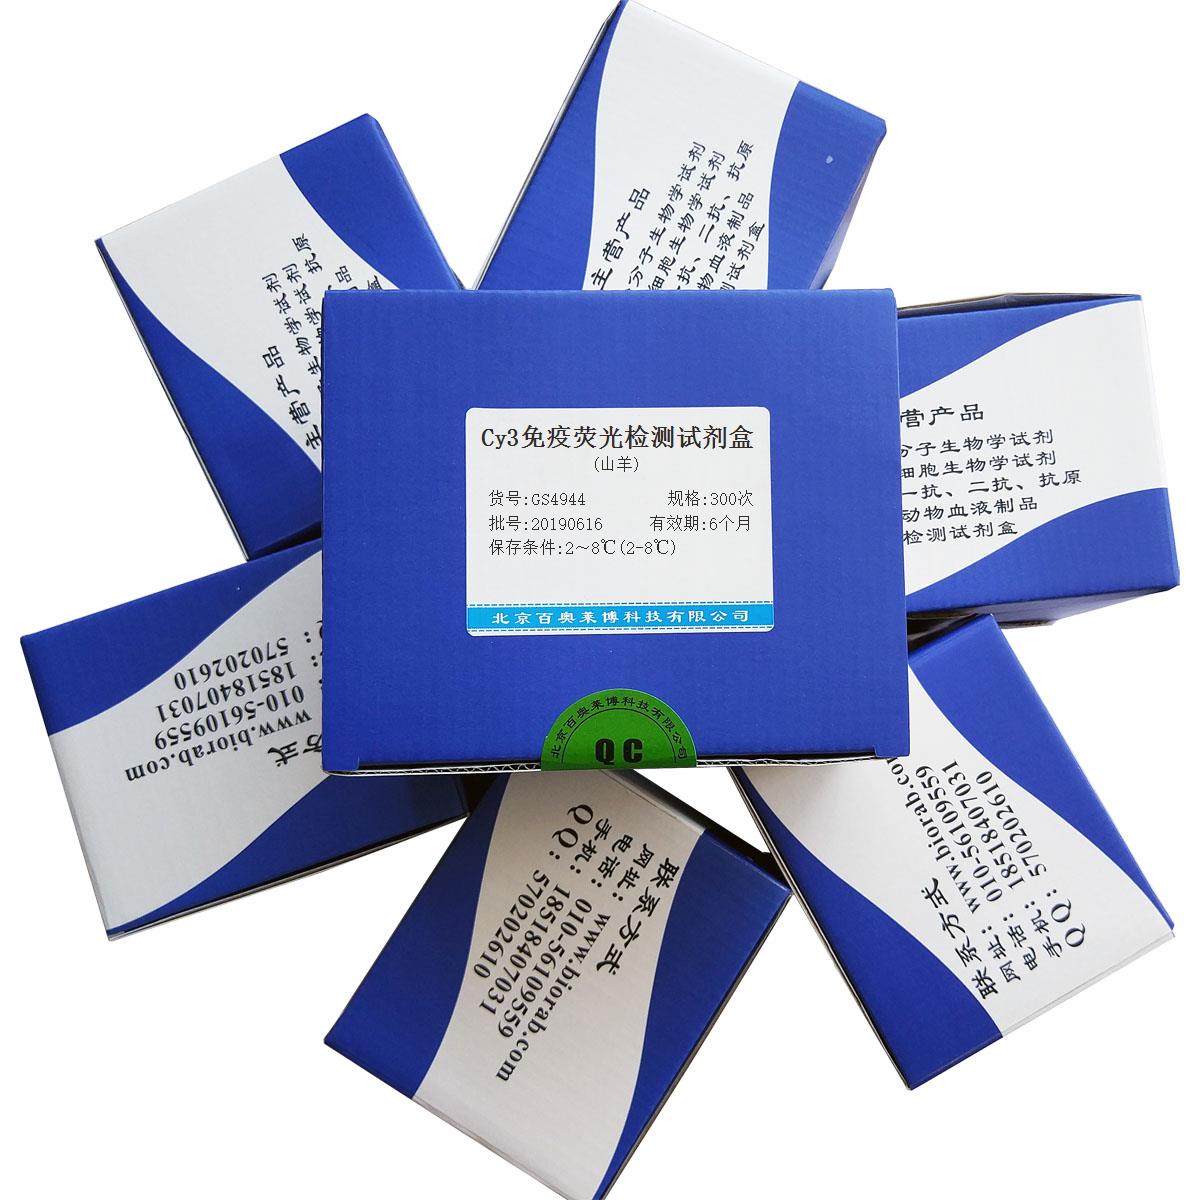 Cy3免疫荧光检测试剂盒(山羊)北京价格